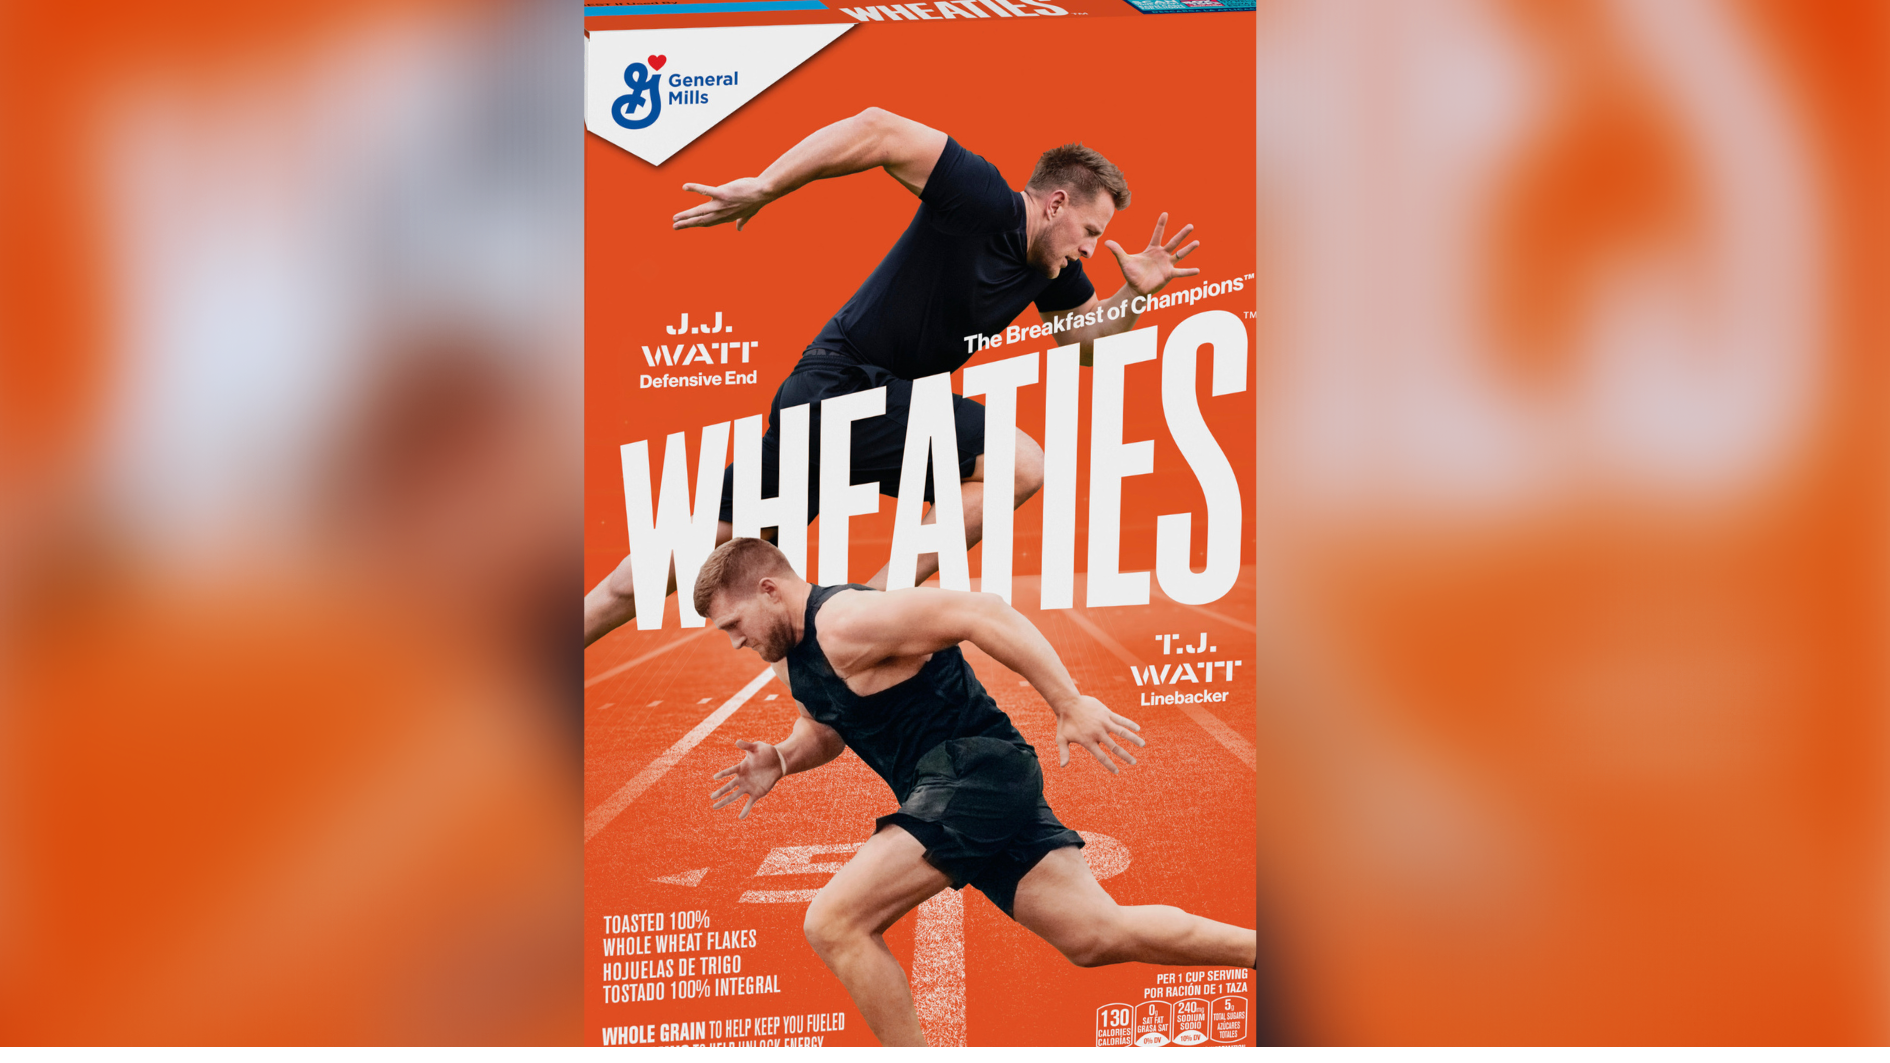 NFL's Watt brothers make history on Wheaties box